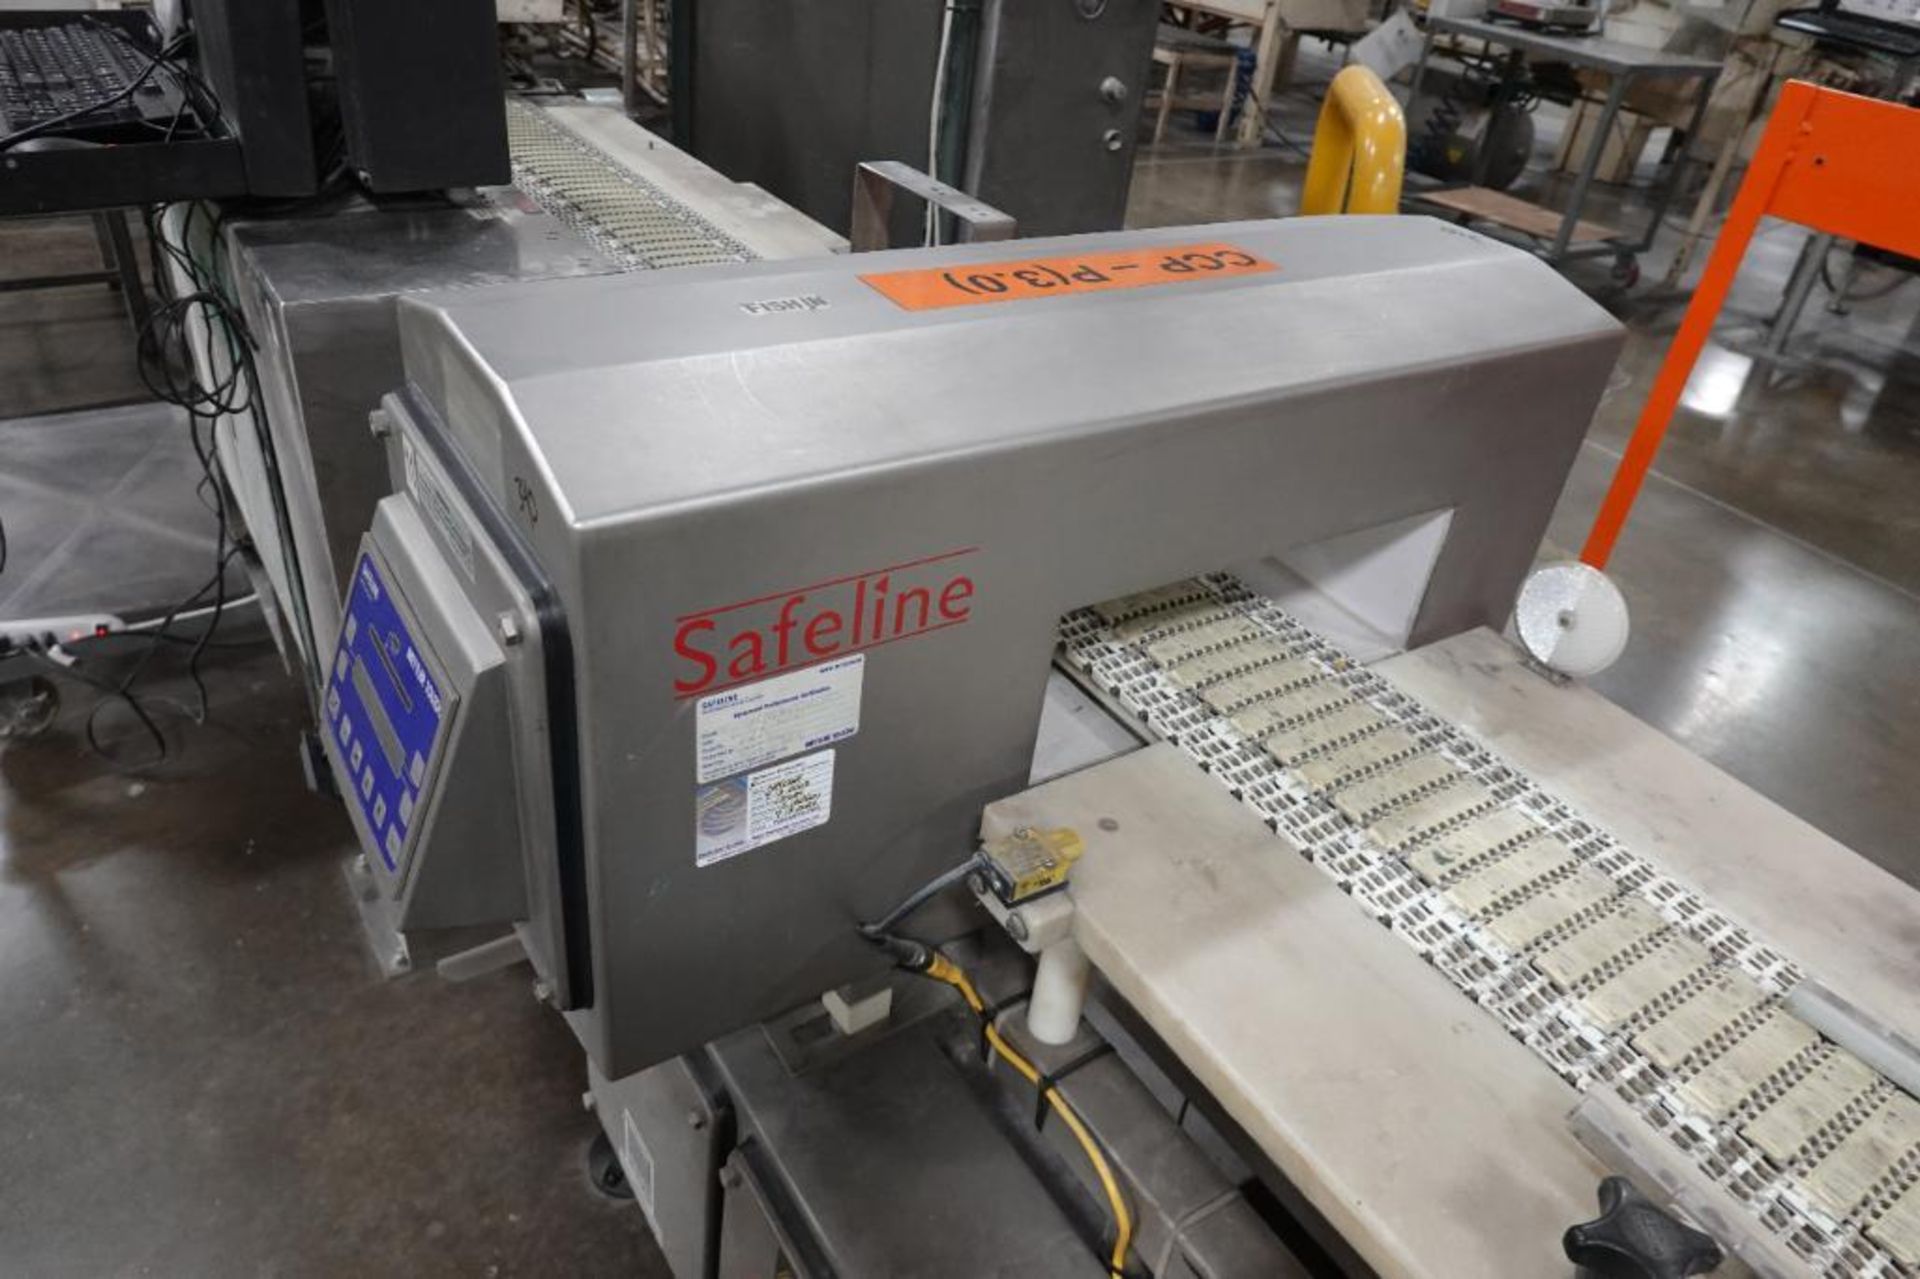 Safeline metal detector with conveyor - Image 4 of 12